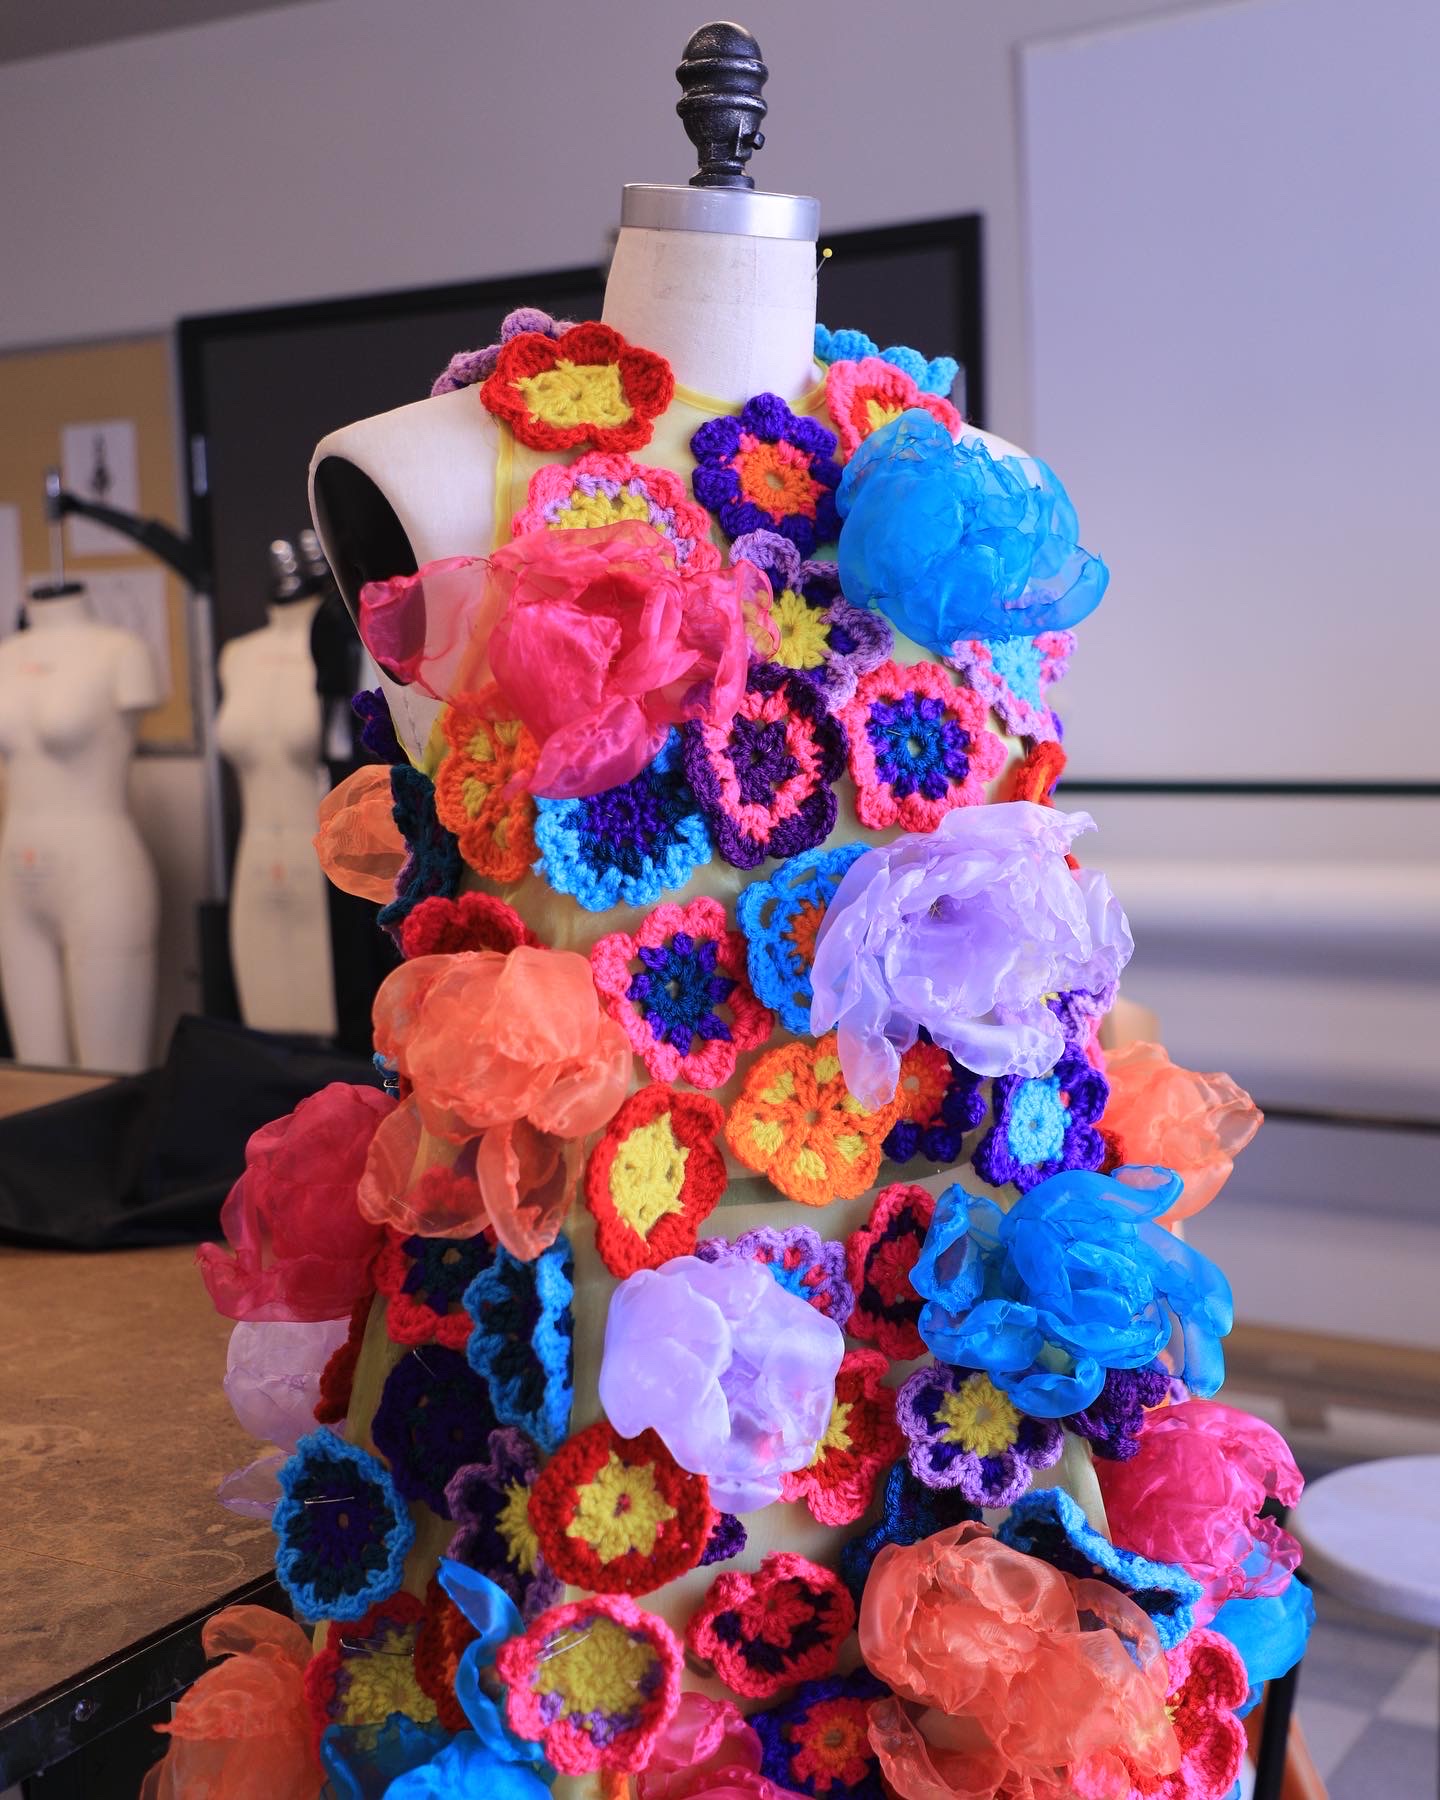 Sofia Masuda fashion design dress in bright orange, pink, blue, and yellow crocheted flowers